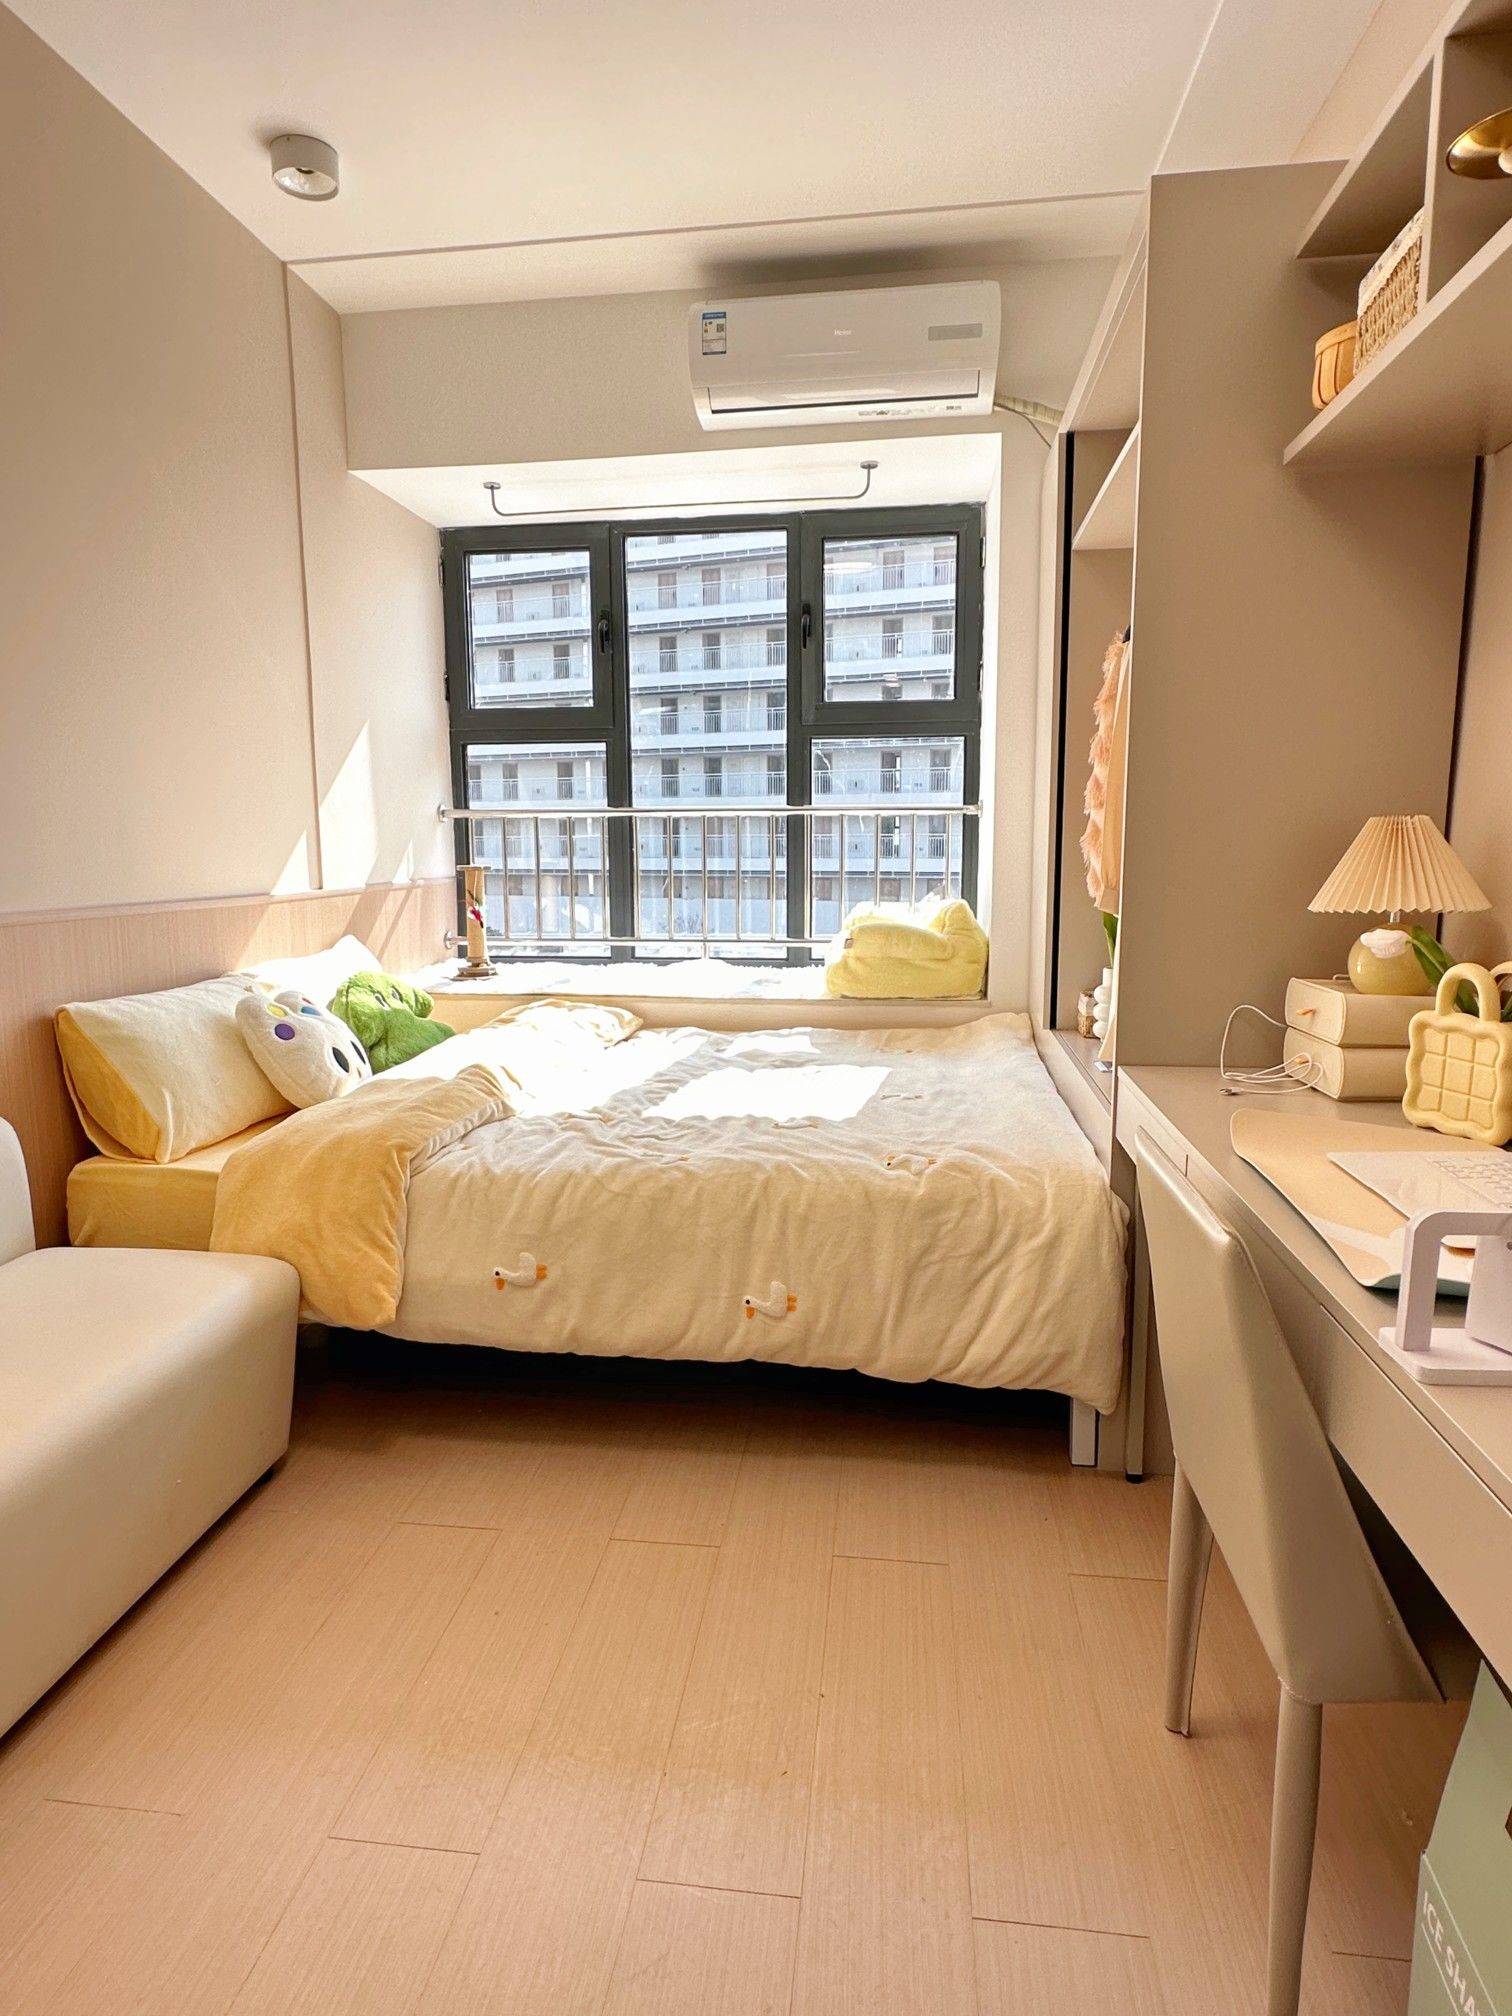 Shanghai-Pudong-Cozy Home,Clean&Comfy,No Gender Limit,LGBTQ Friendly